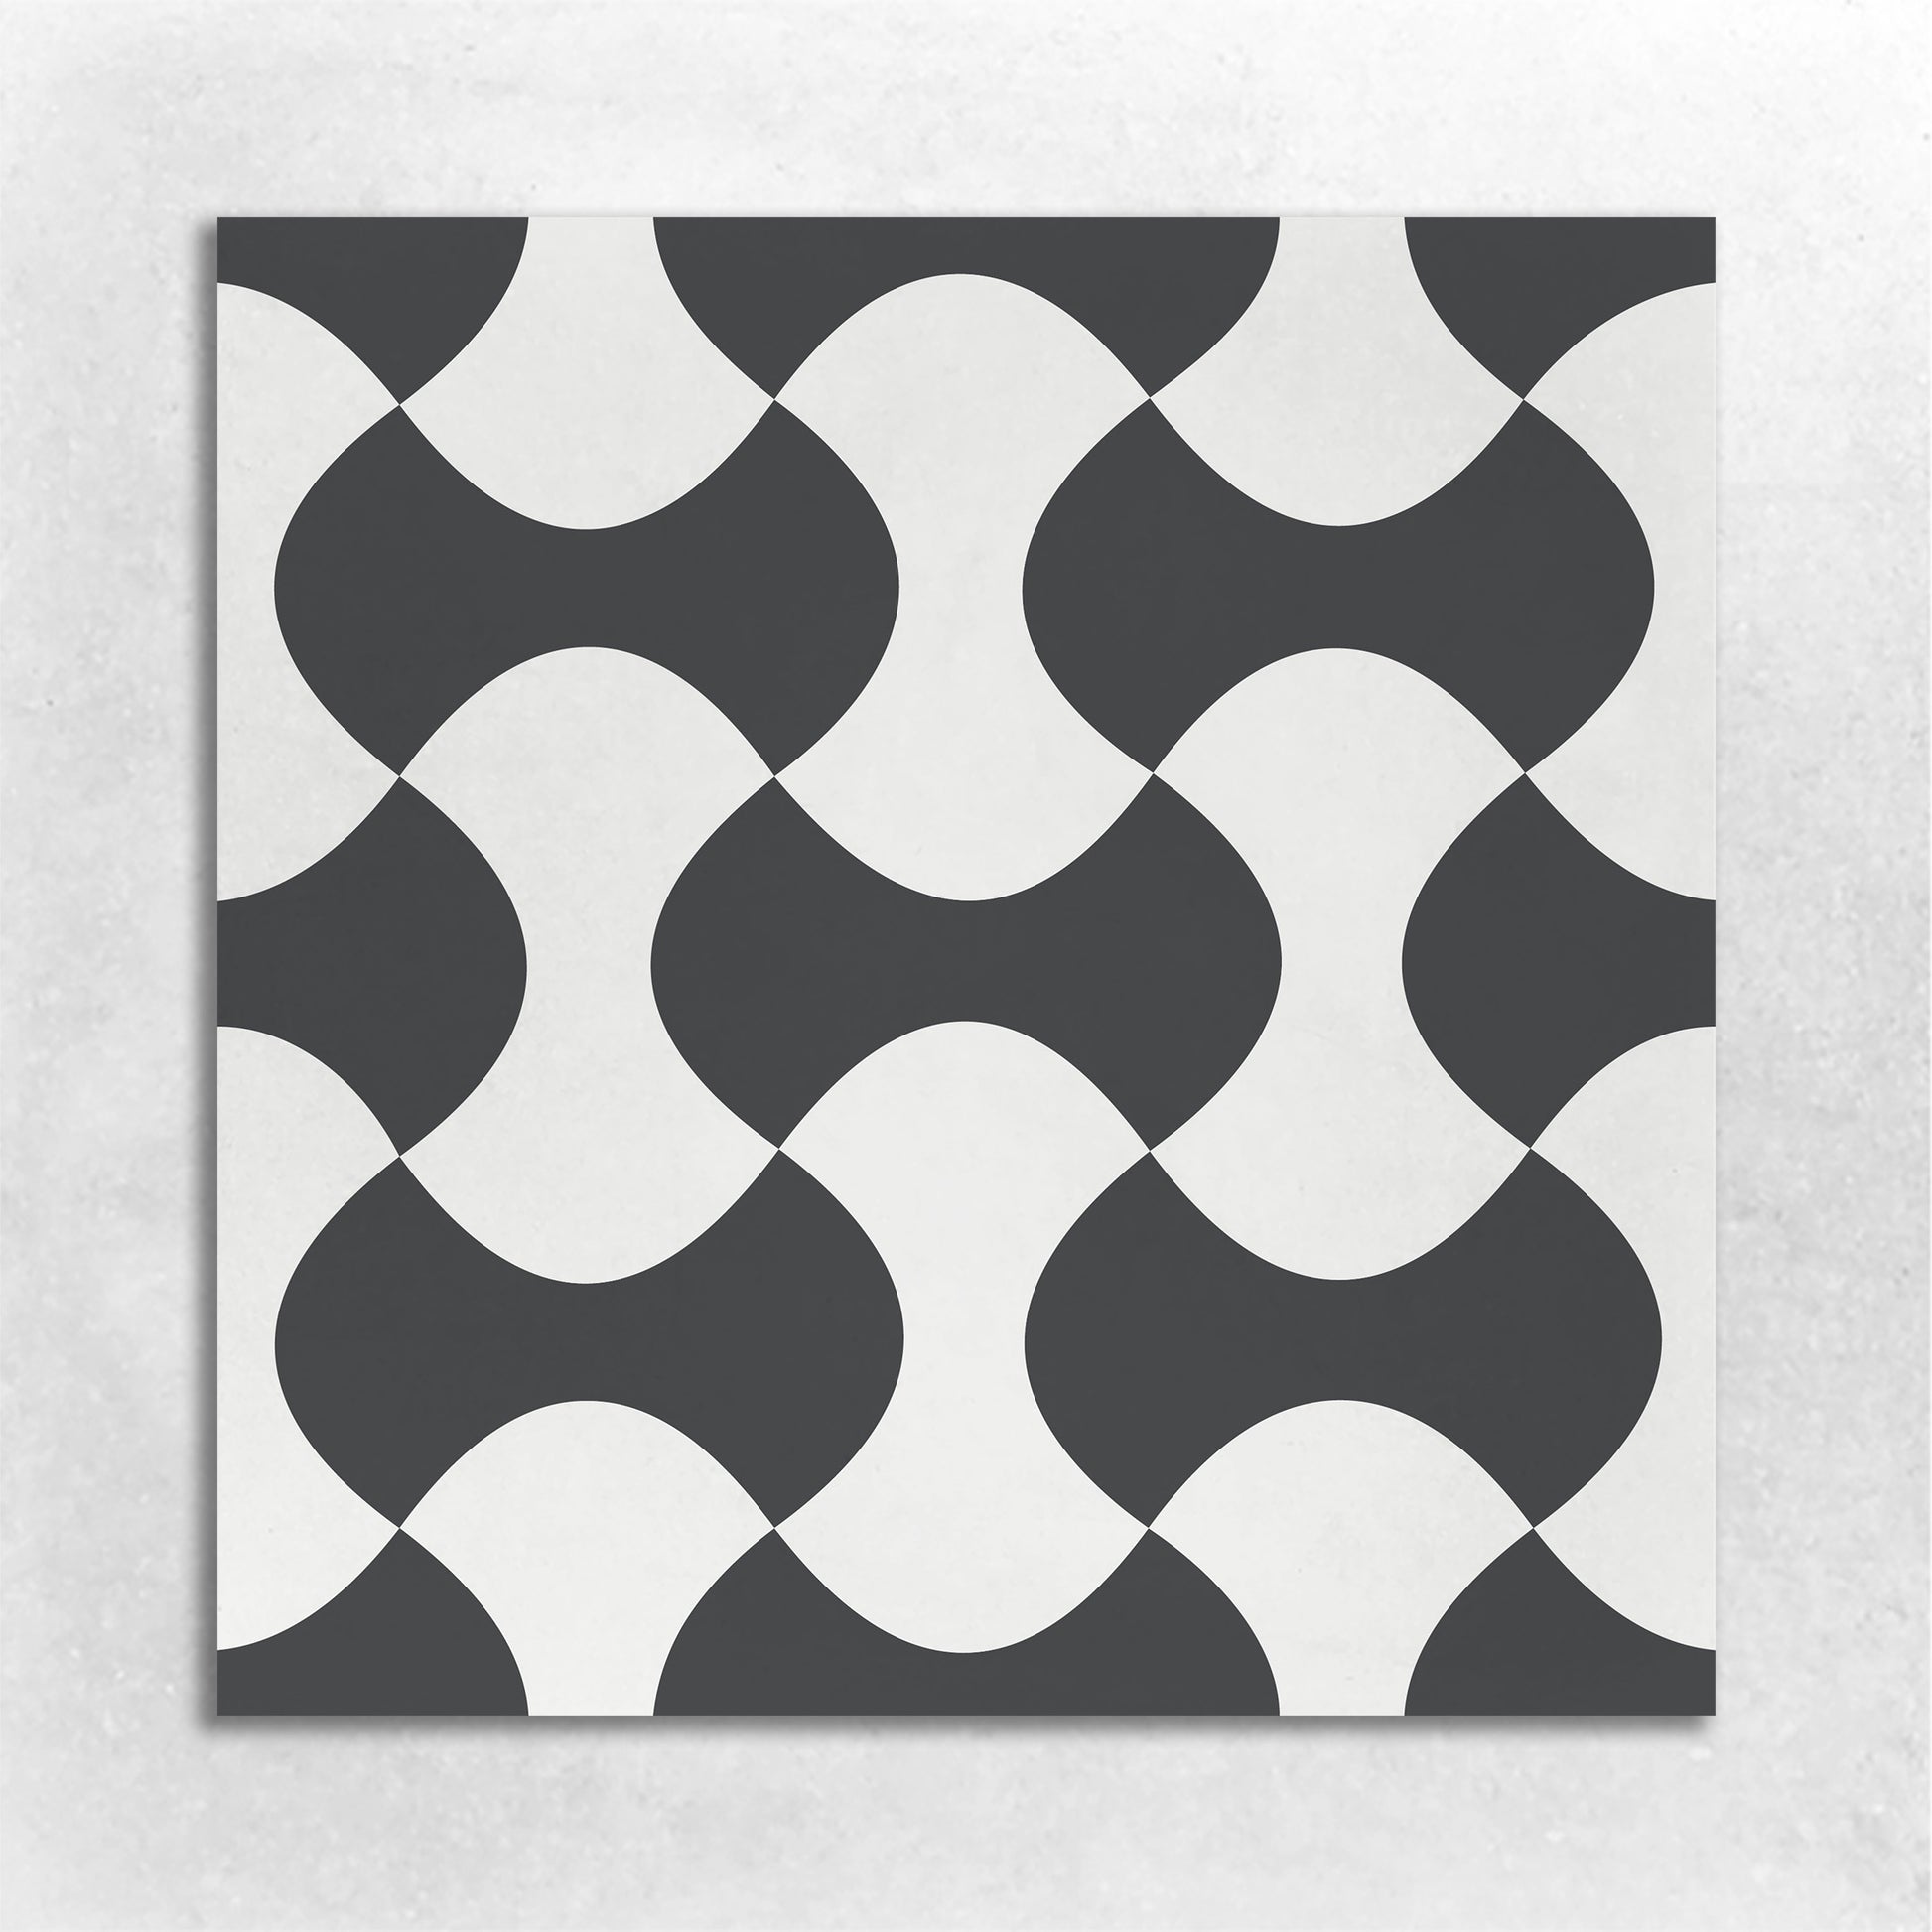 8x8 cement tile modern interlocking basketweave pattern in black and white